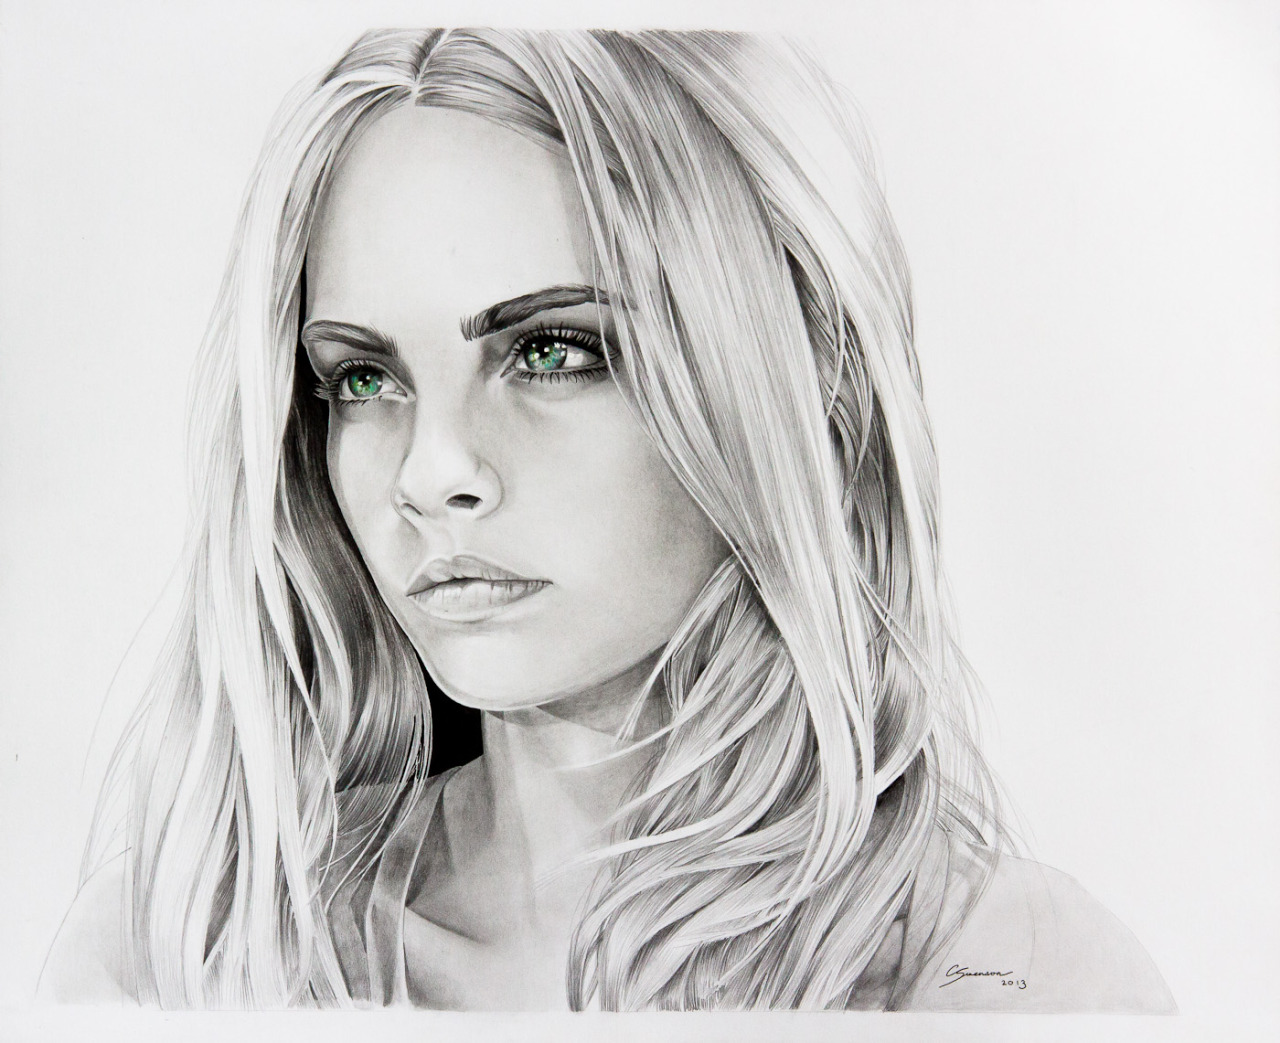 Pencil portrait of fashion model Cara Delevingne, by Clayton Swenson Artistry